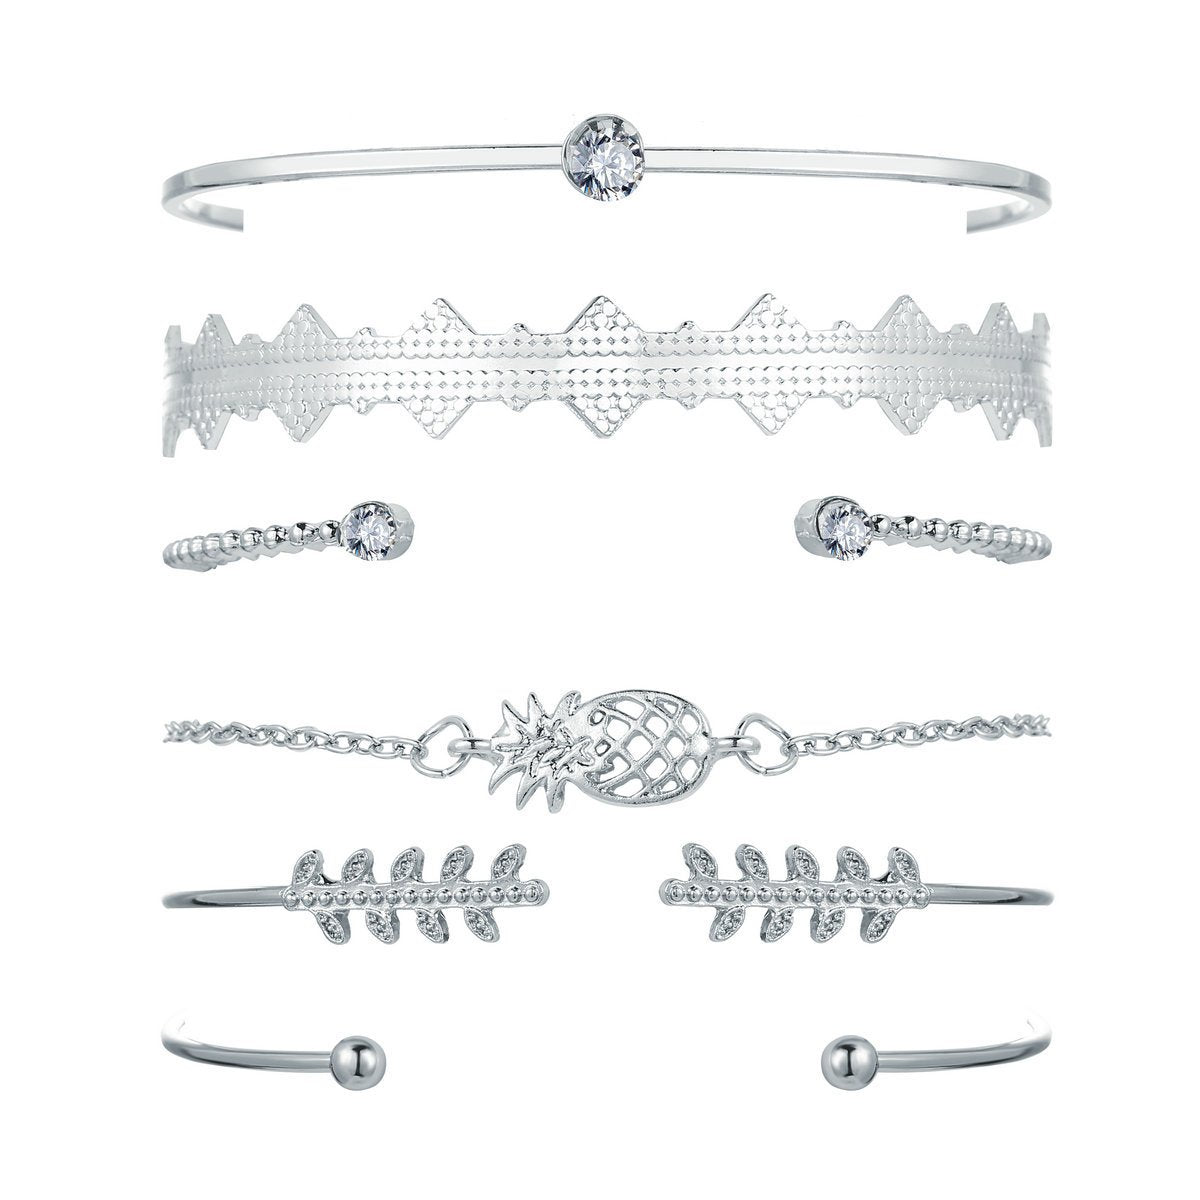 6 Piece Geometric Bangle Set With Austrian  Crystals 18K White Gold Plated Bracelet ITALY Design Elsy Style Bracelet